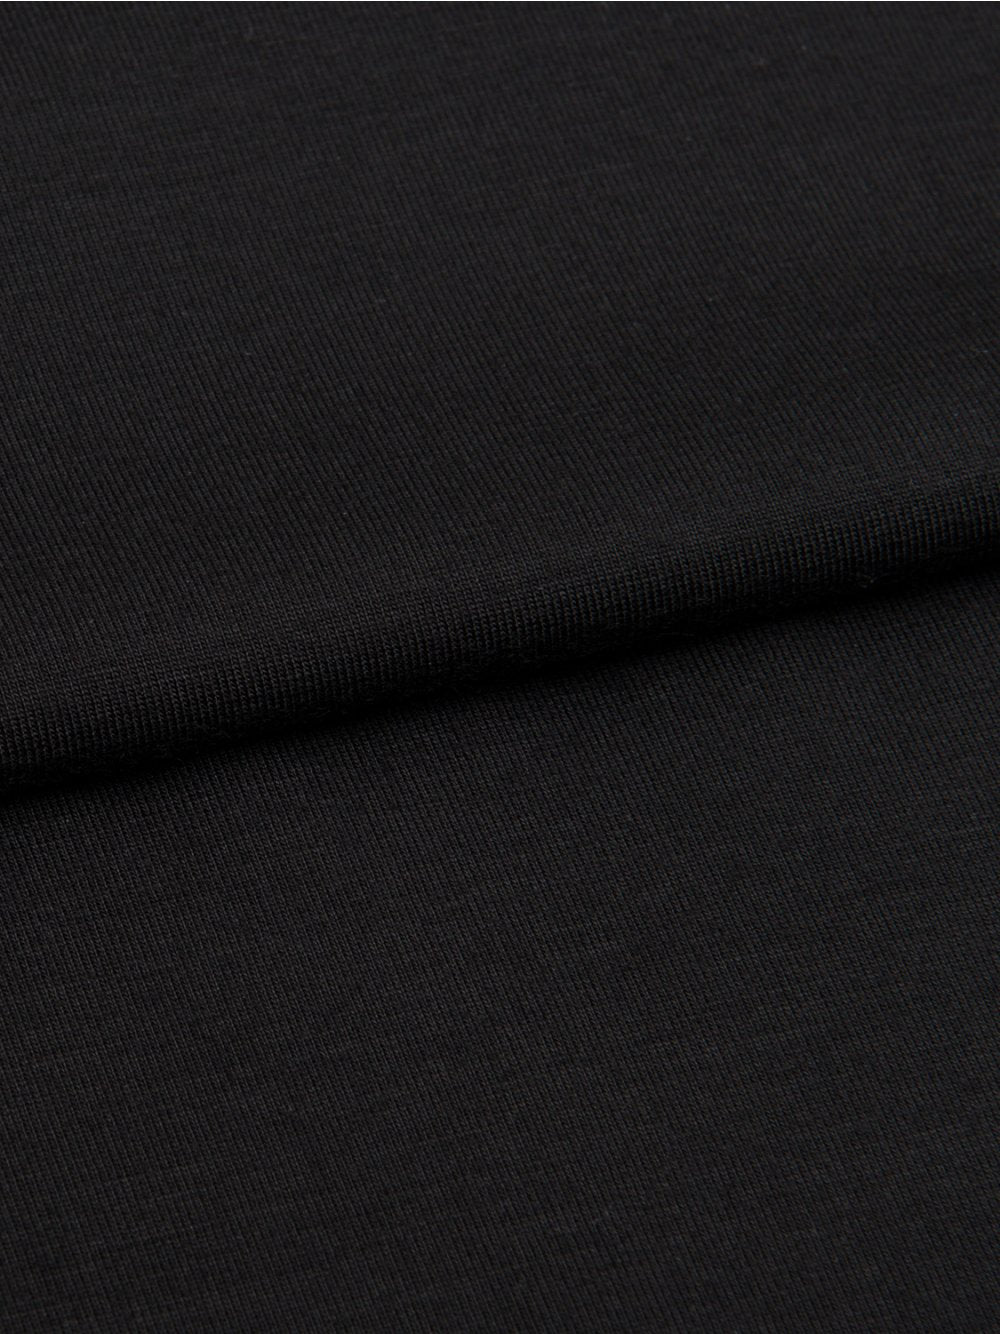 Derek Rose Jack Underwear V-Neck T-Shirt in Black